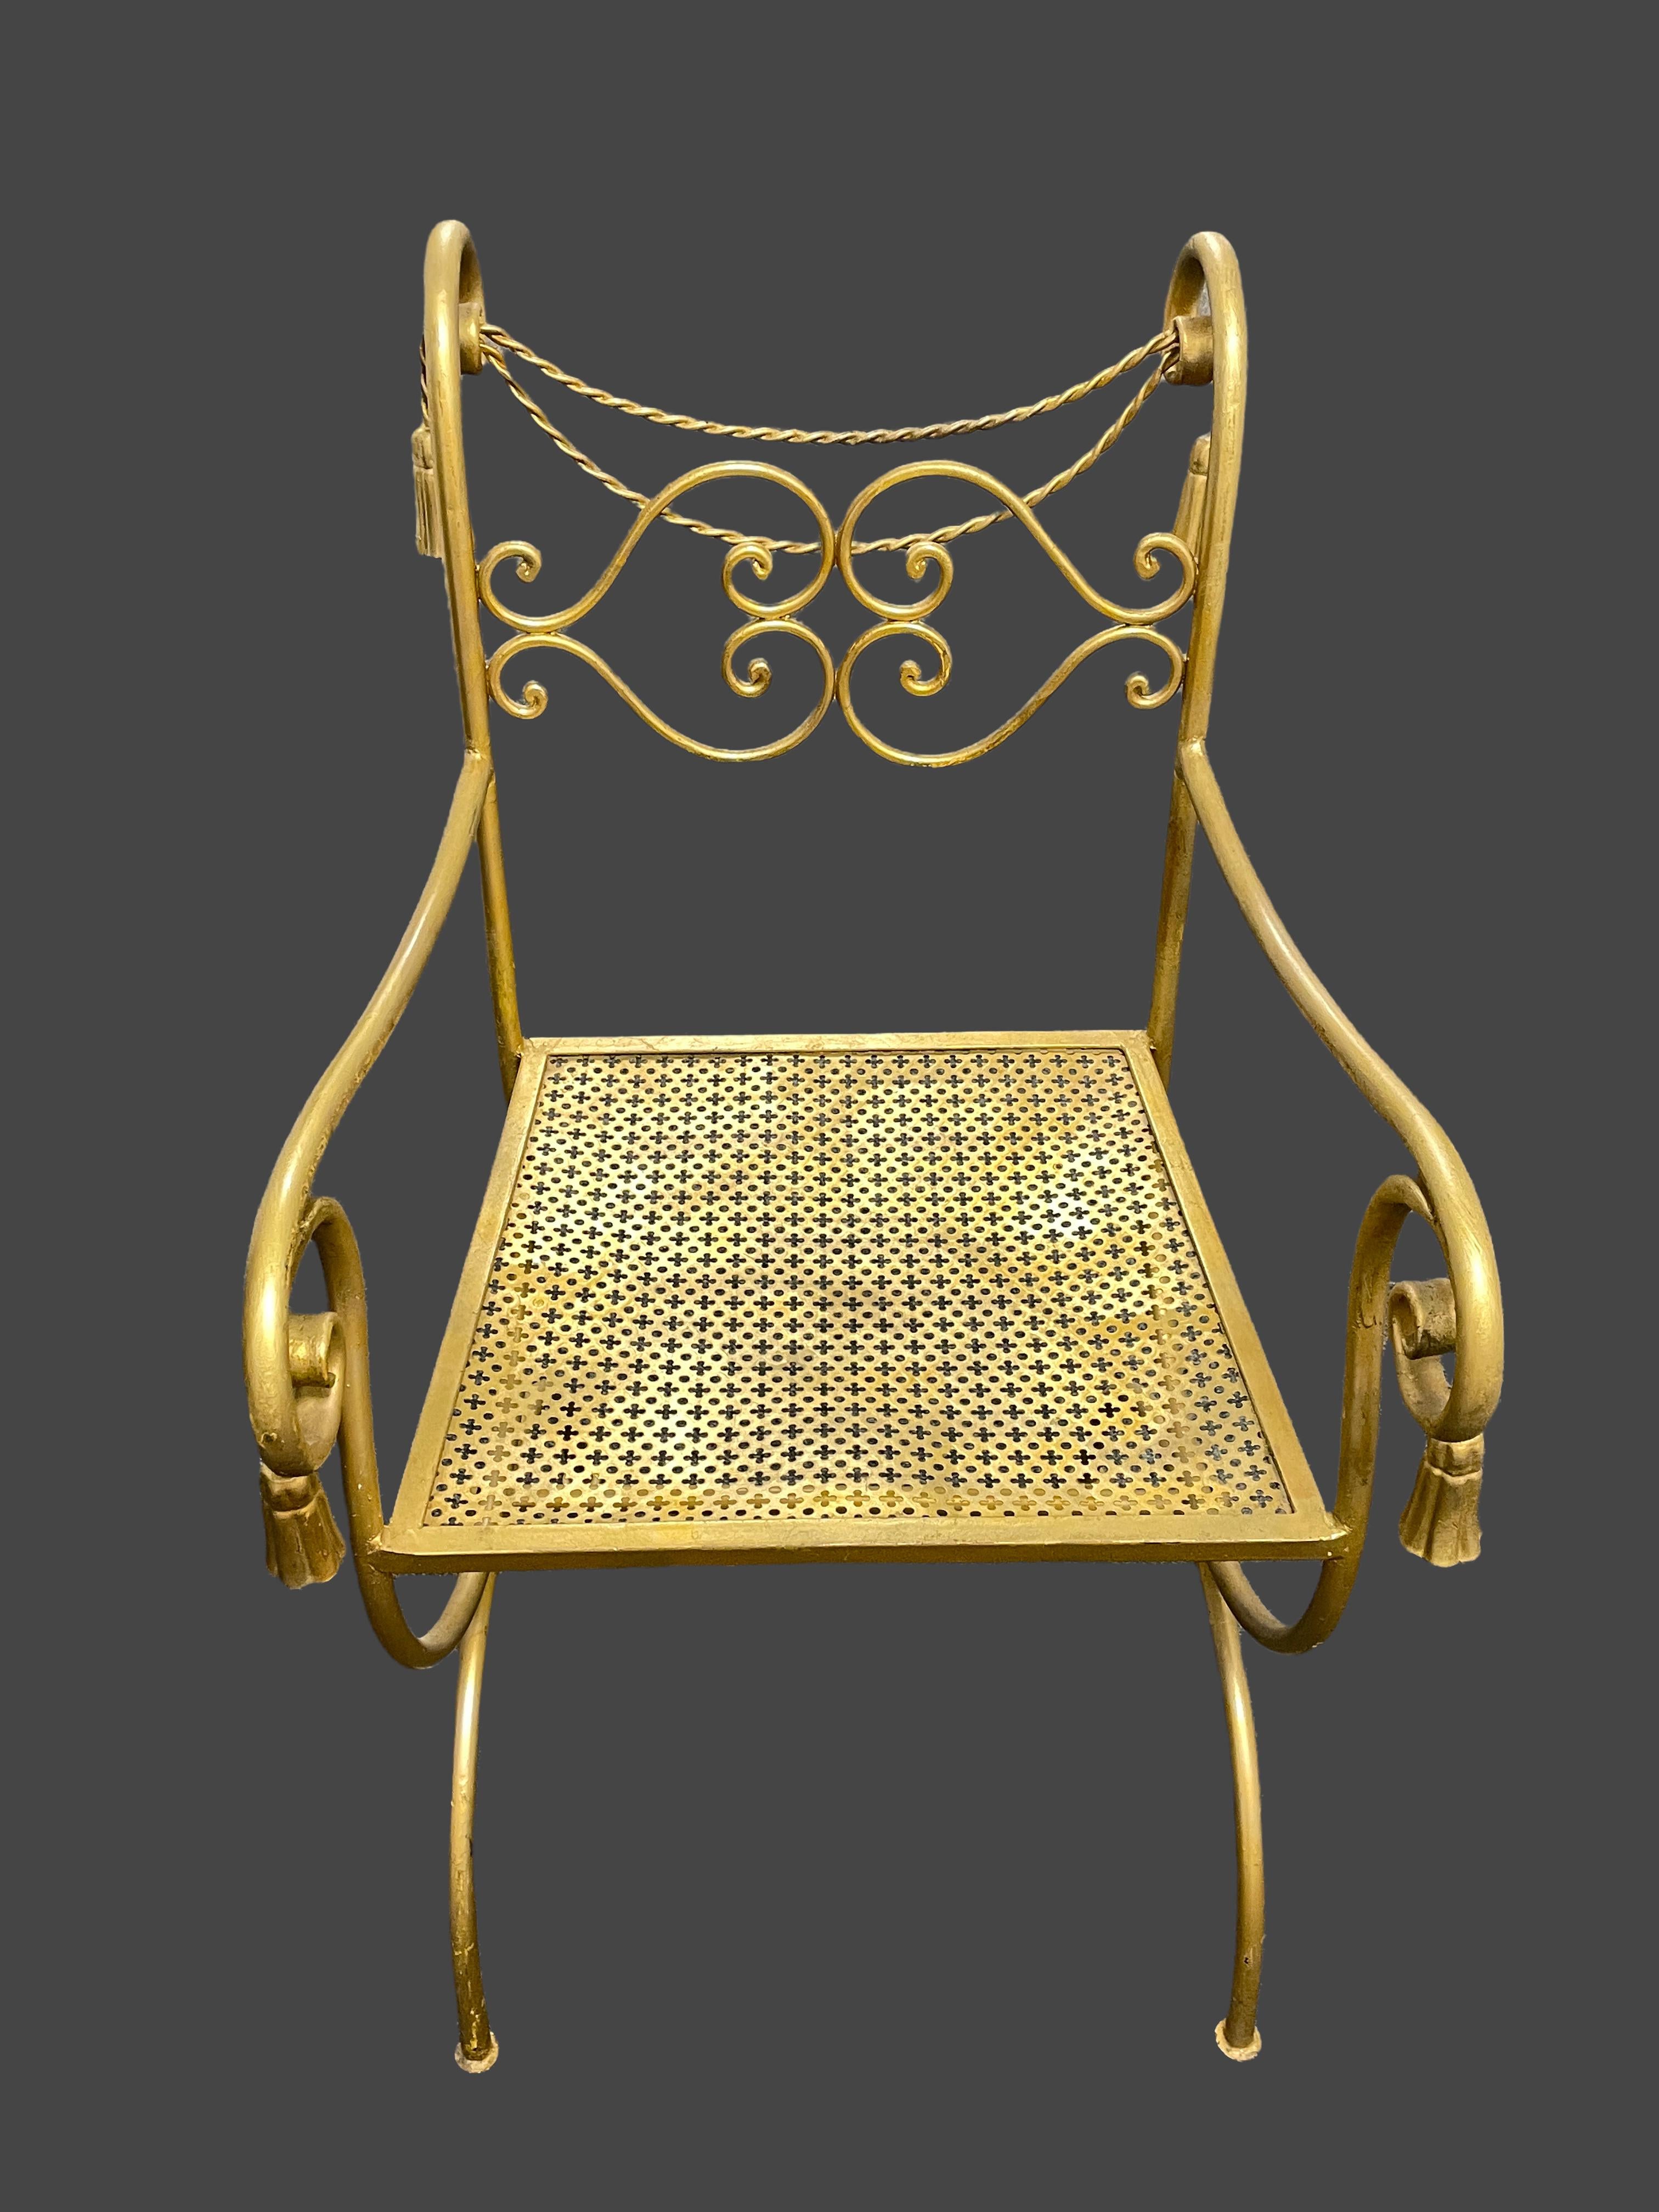 1960s Italian Mid-Century Regency Style Gilt Metal Rope & Tassel Chair For Sale 4